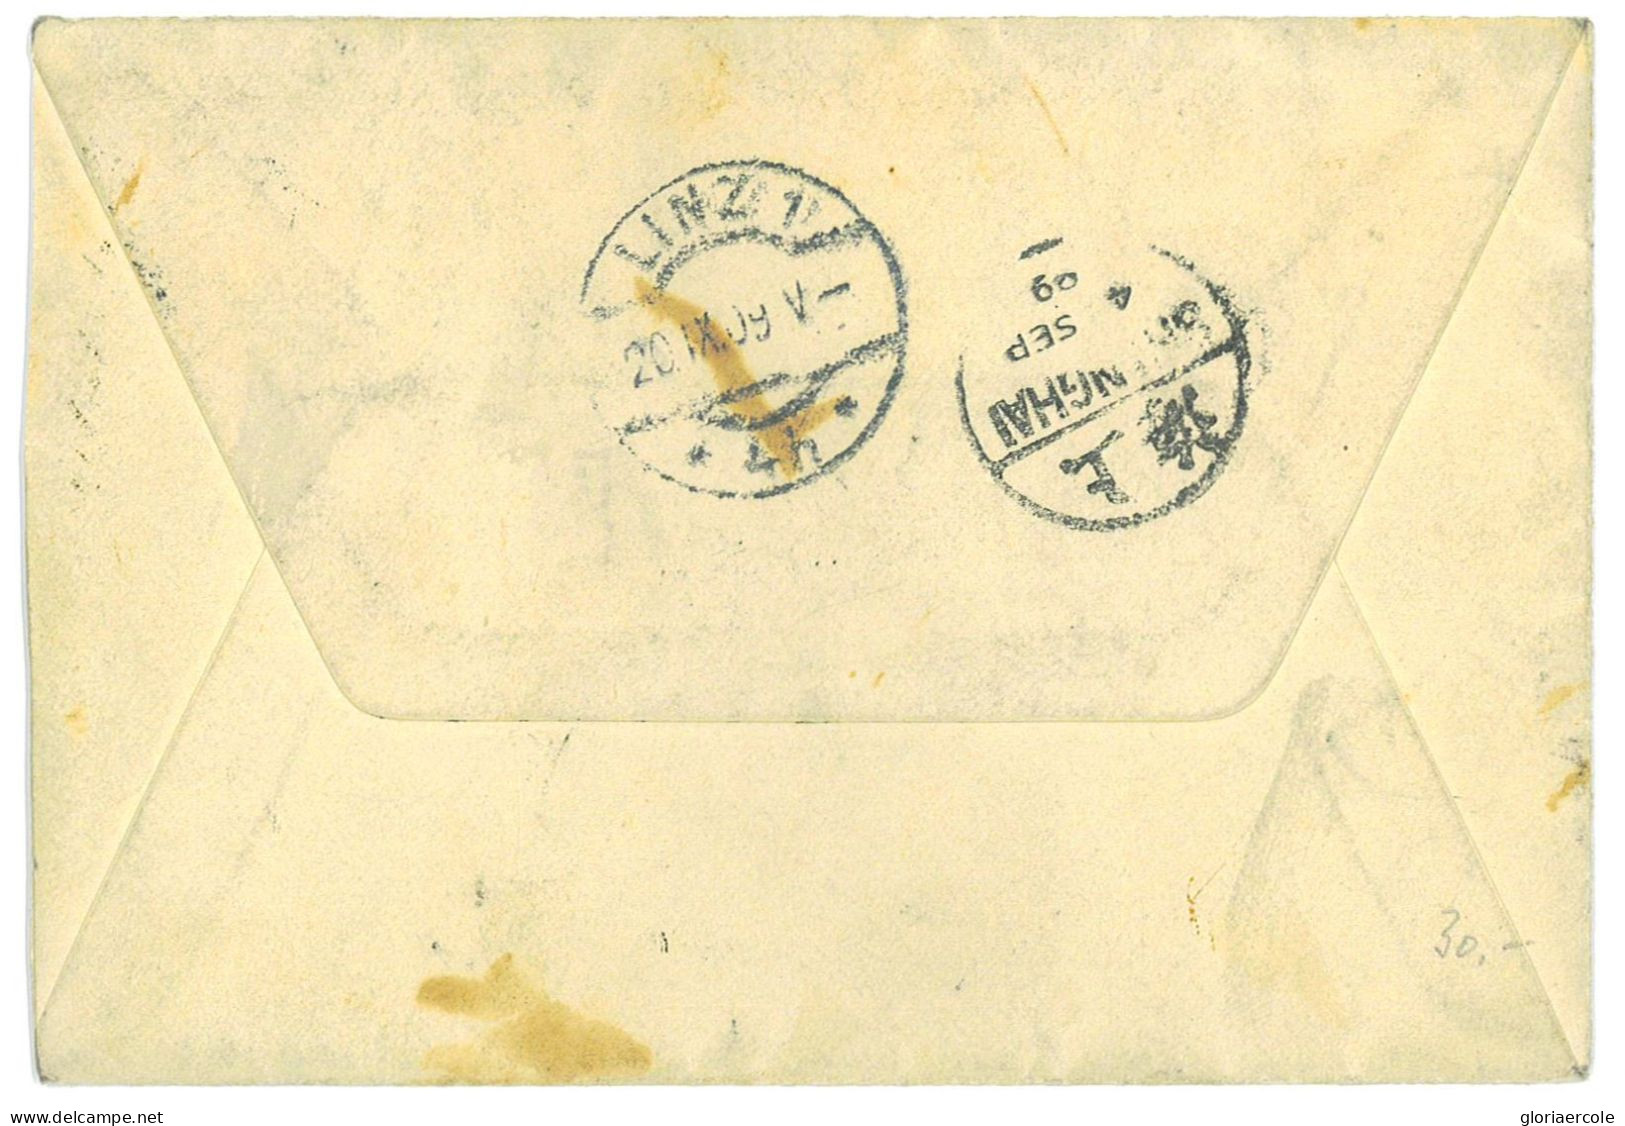 P2774 - 3 COLOUR ENVELOPPE FROM SHANGAI TO AUSTRIA 1909 - Lettres & Documents